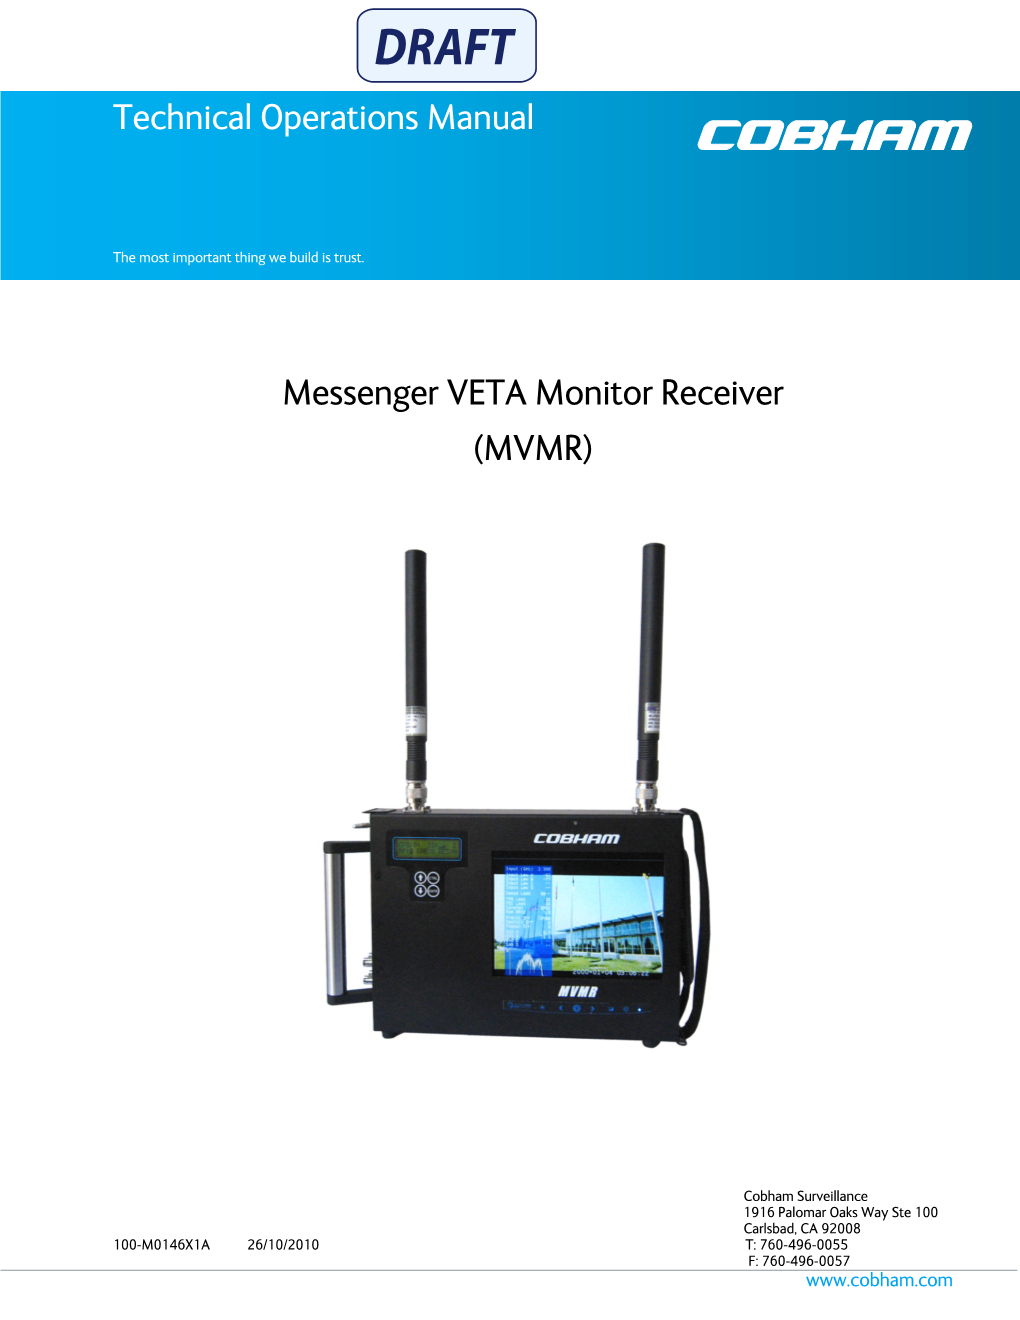 Technical Operations Manual Messenger VETA Monitor Receiver (MVMR)